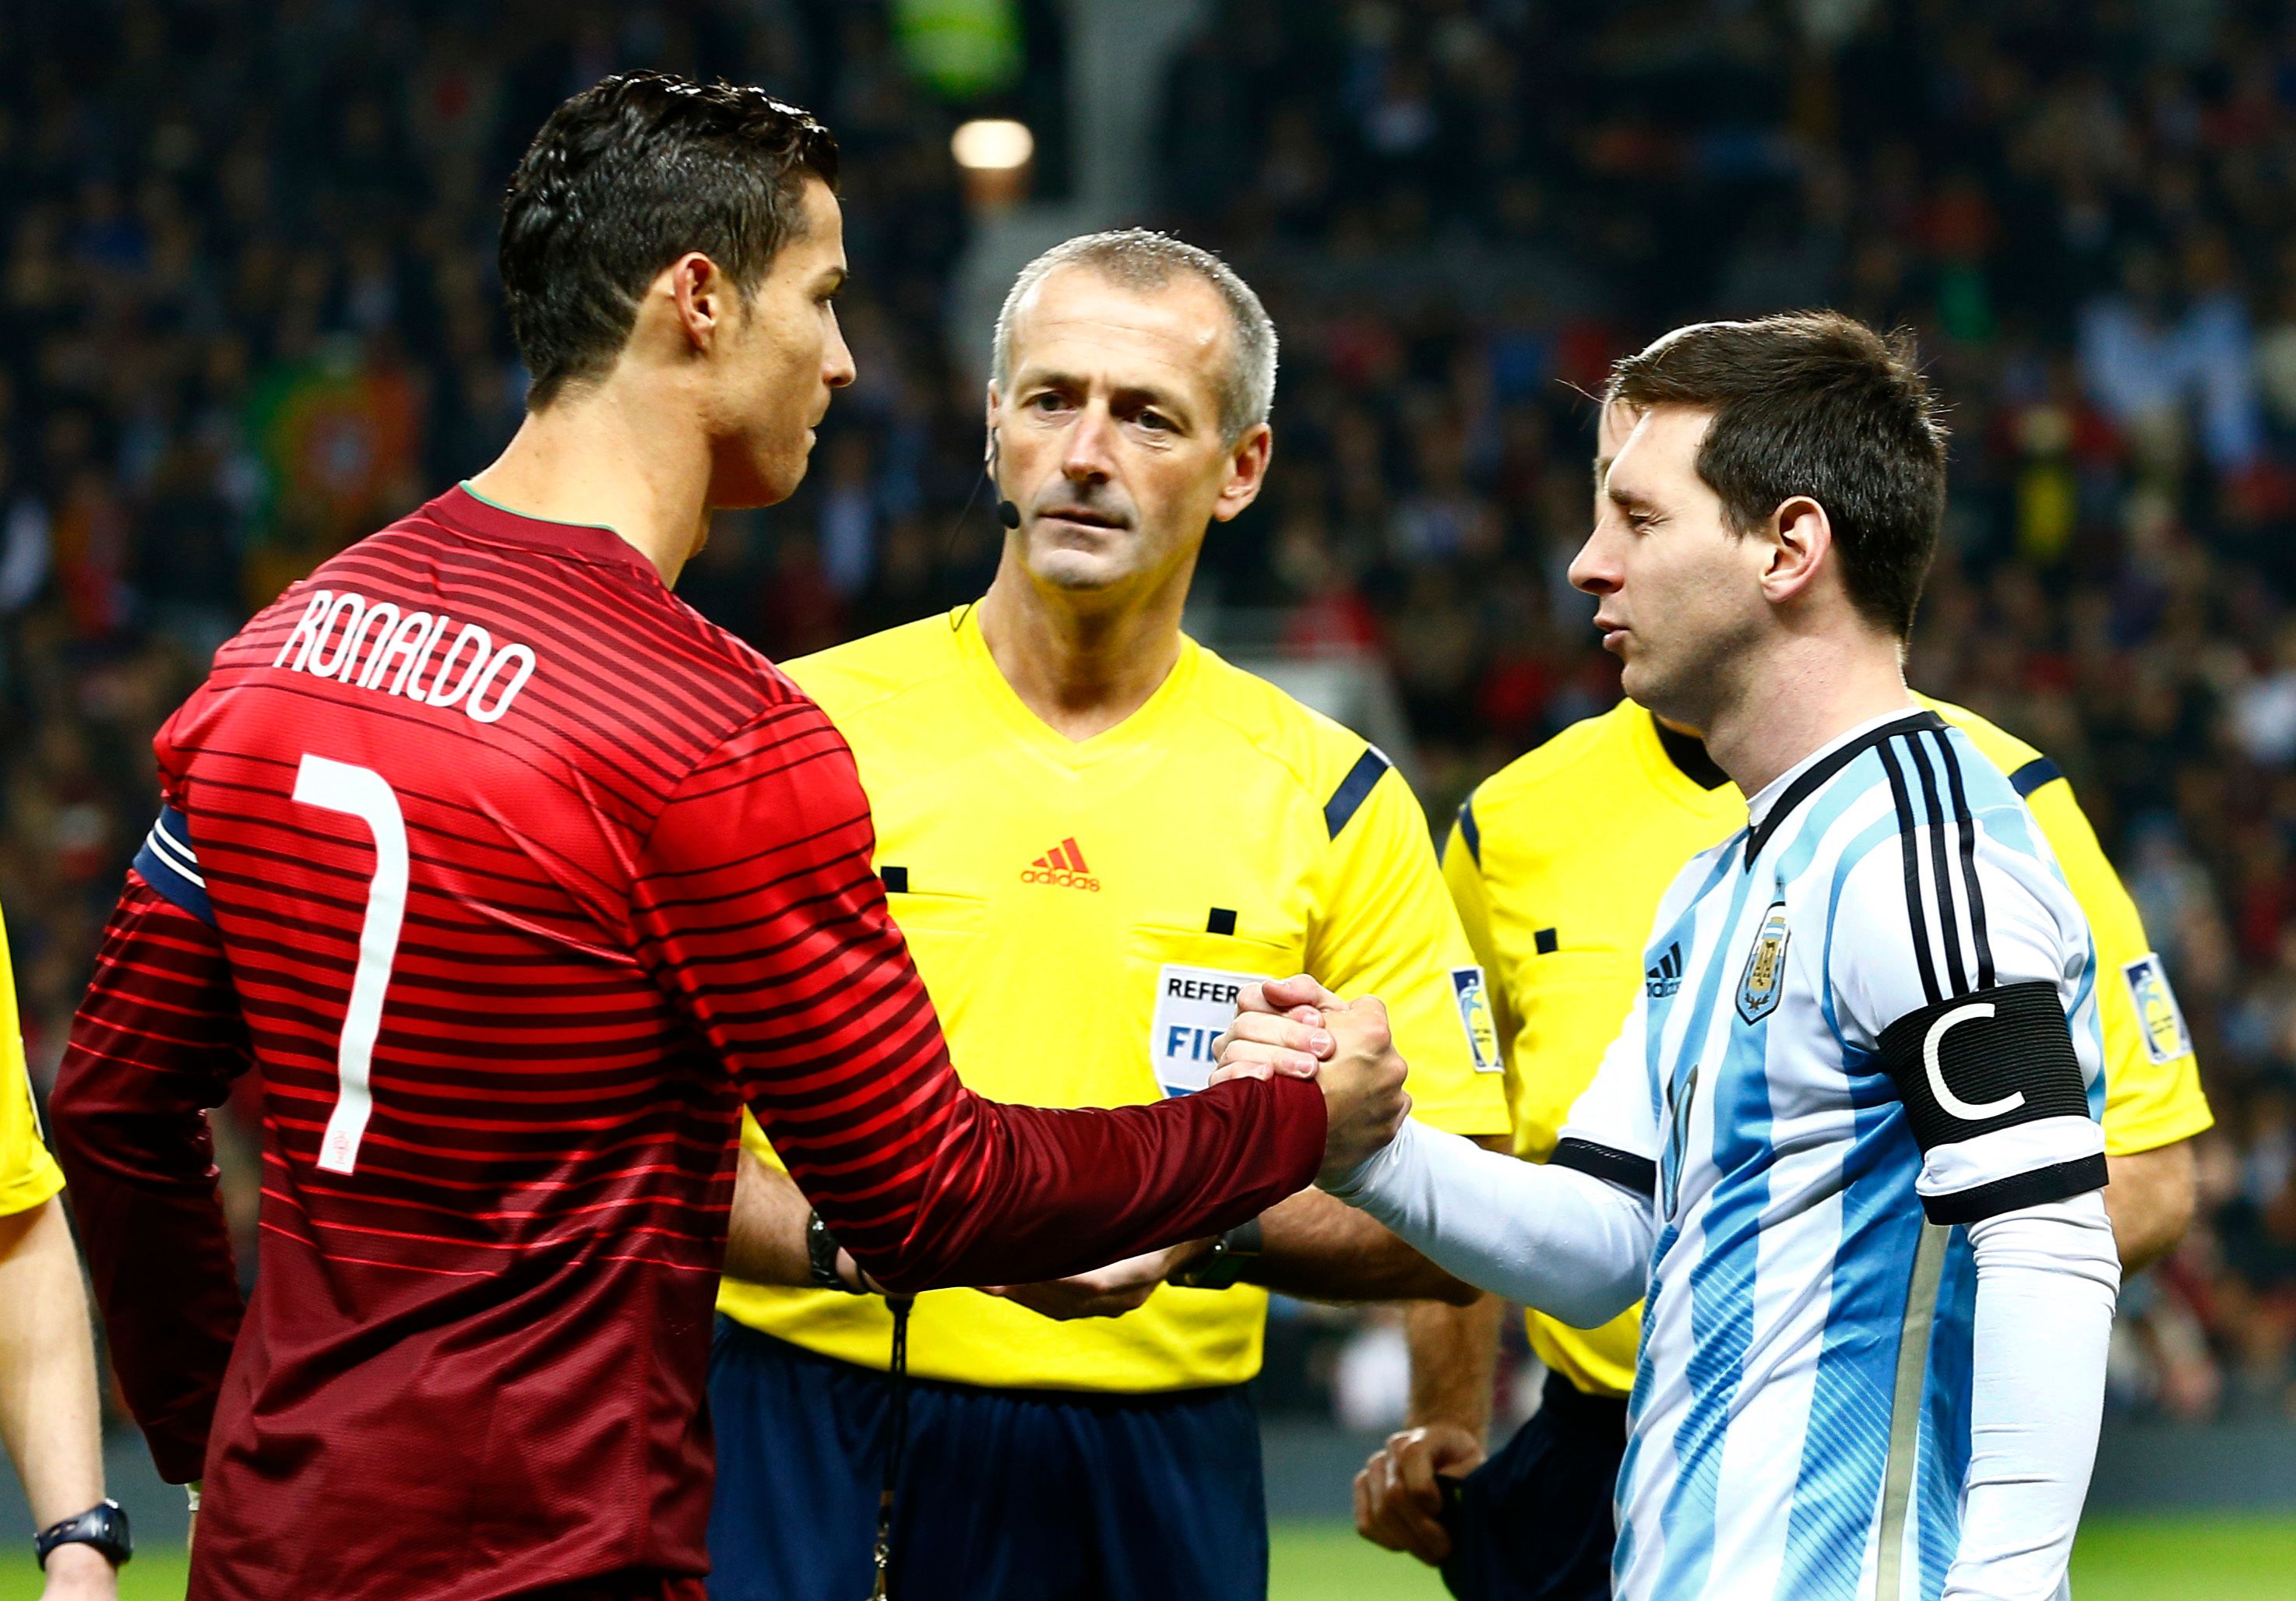 Ronaldo and Messi shake hands before an international friendly.